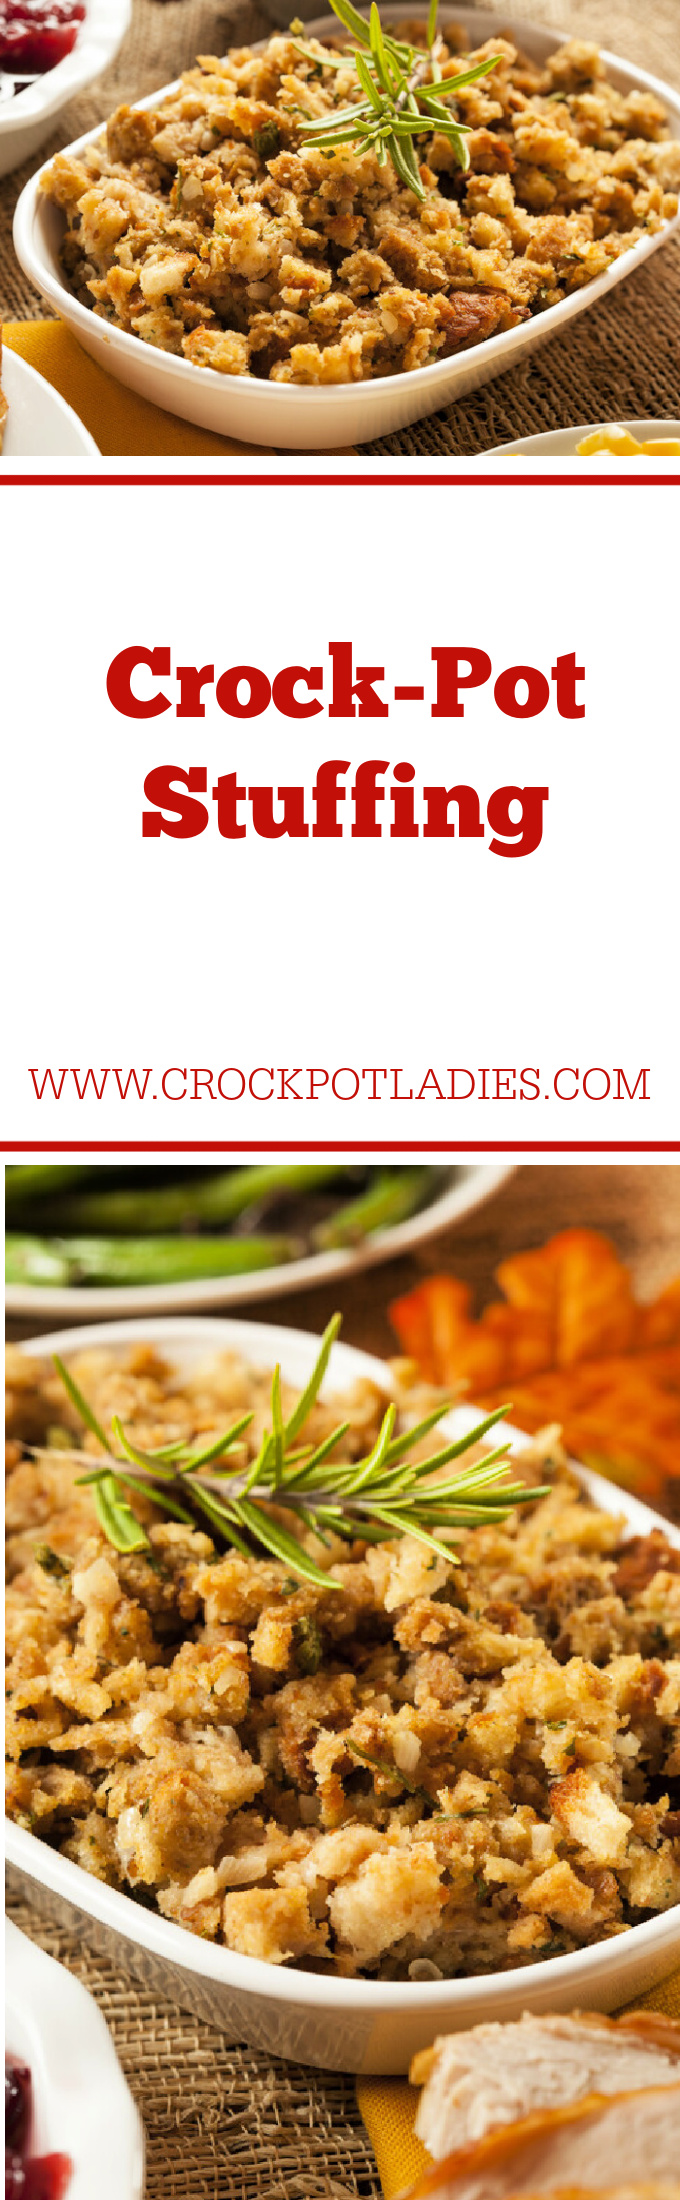 Crock-Pot Stuffing